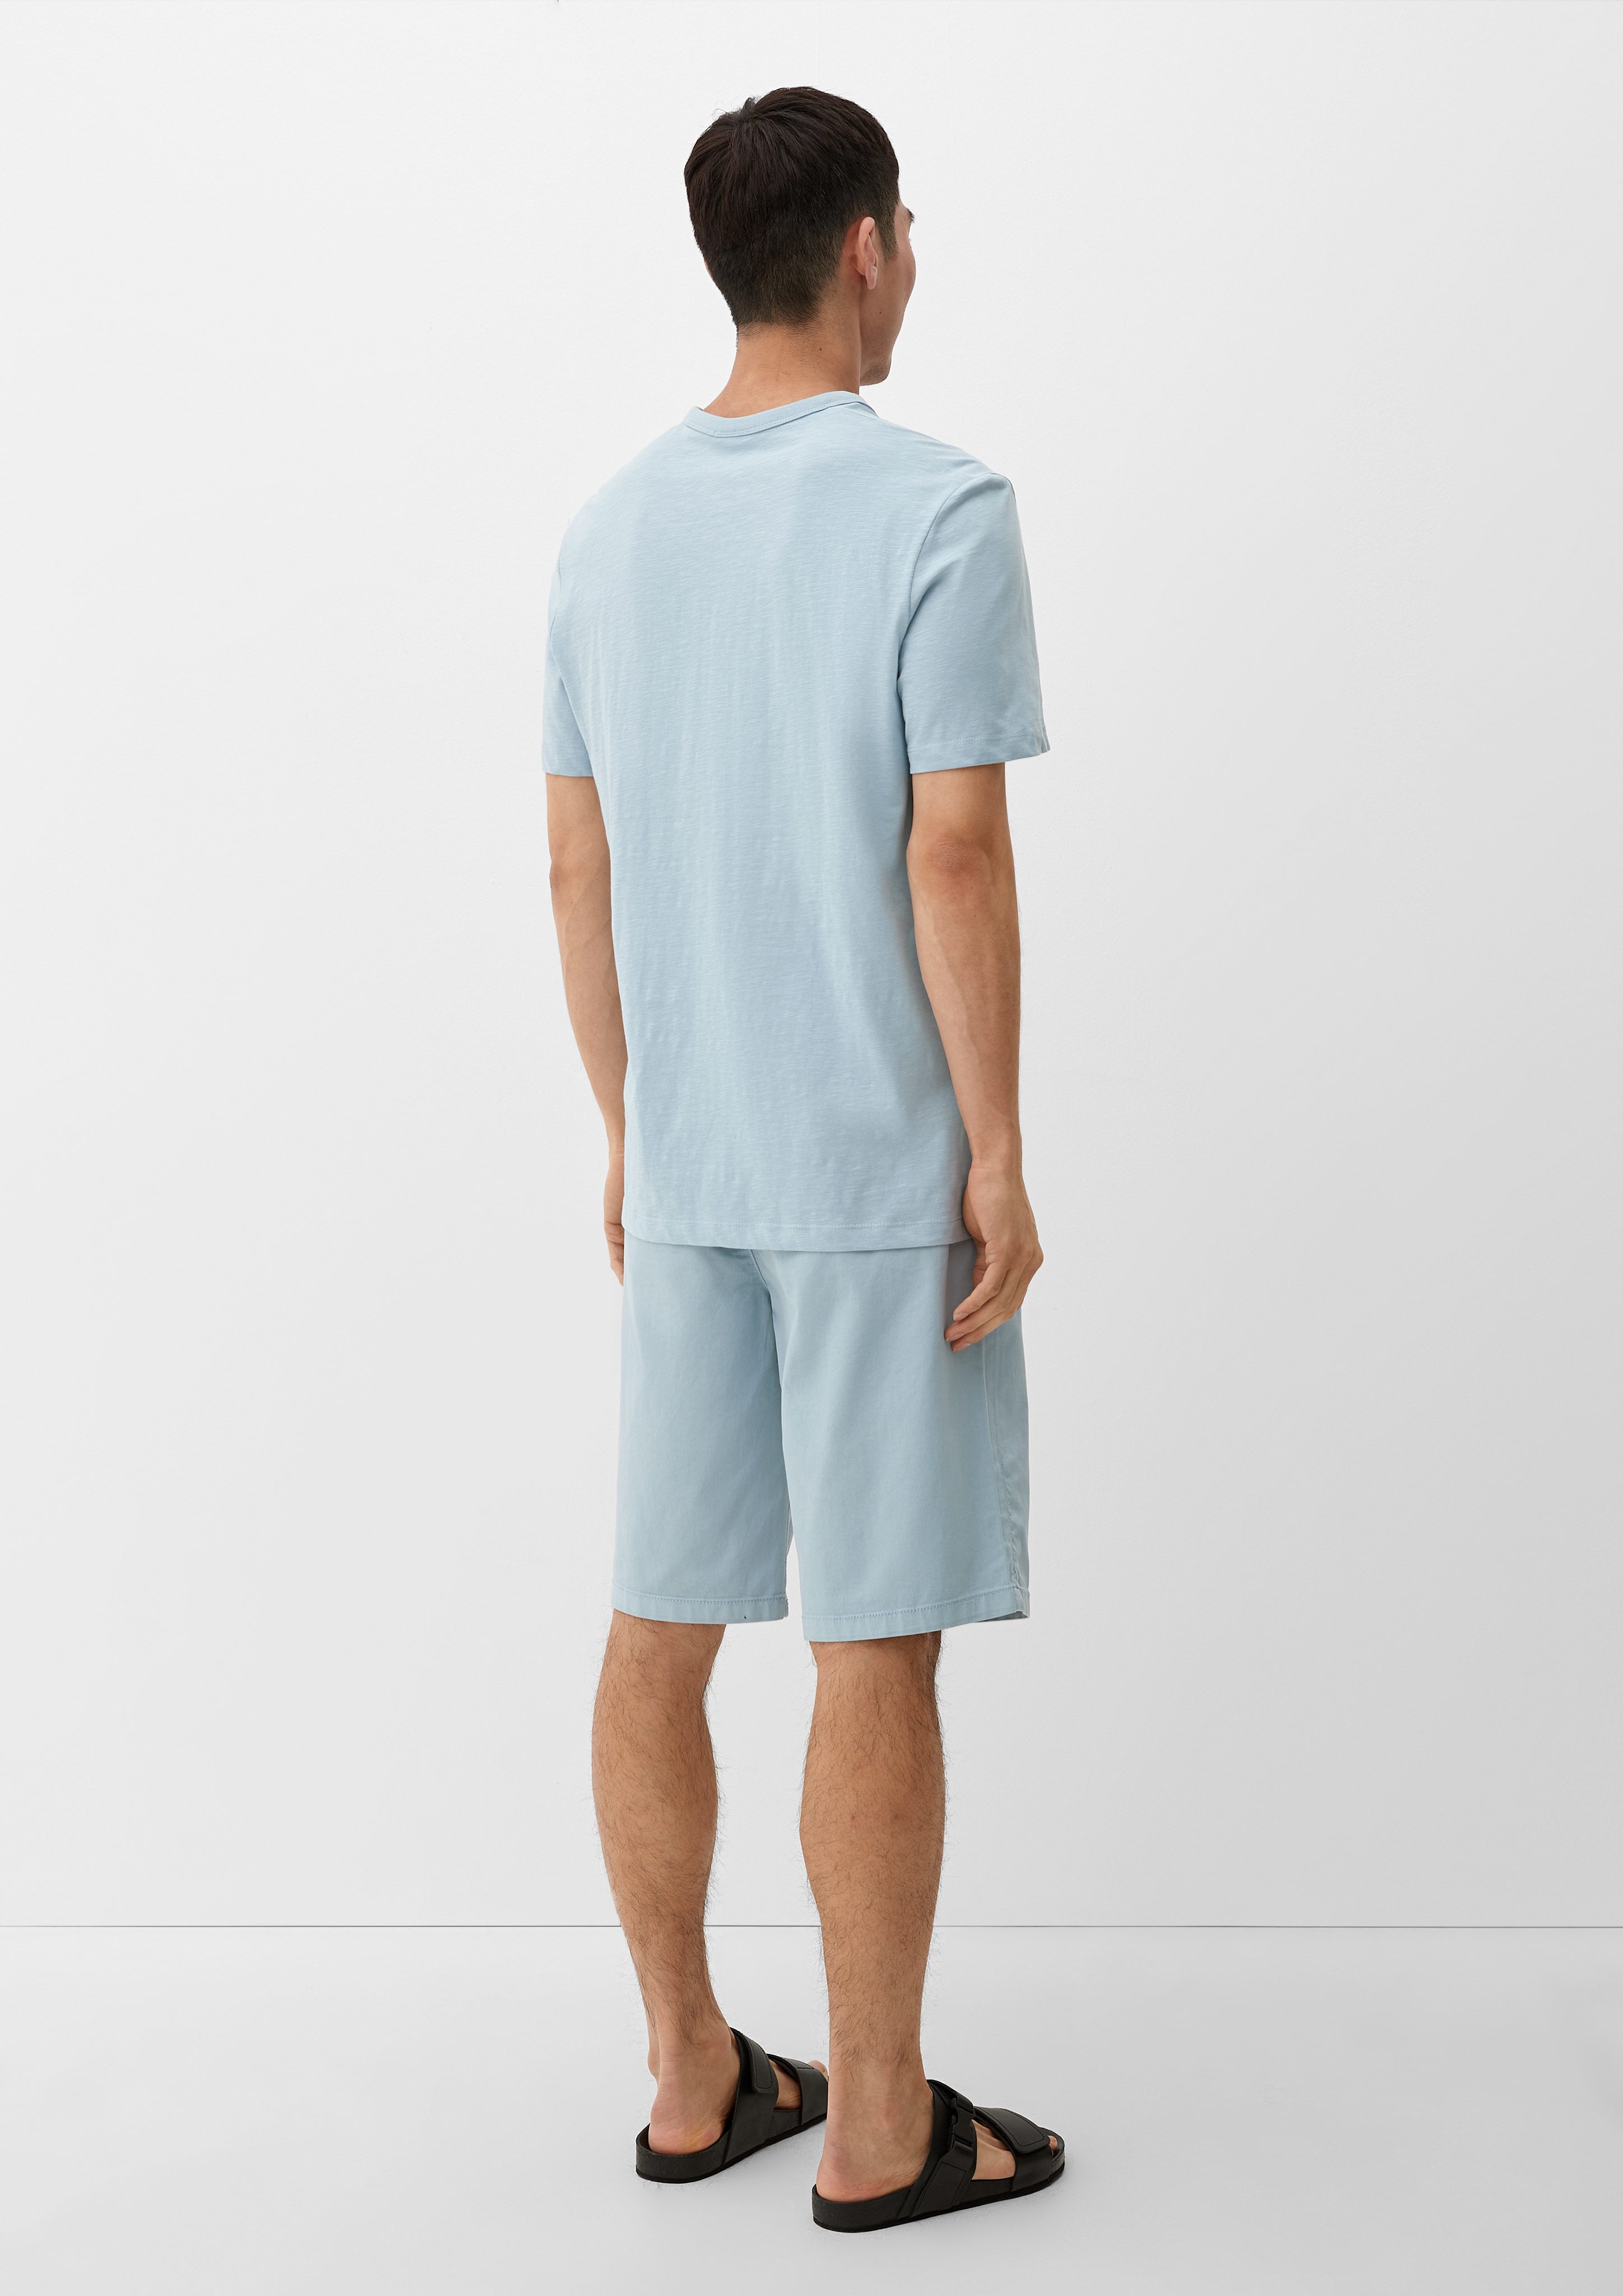 s.Oliver Bermudas hellblau mit Durchzugskordel Relaxed: Dye Bermuda Garment